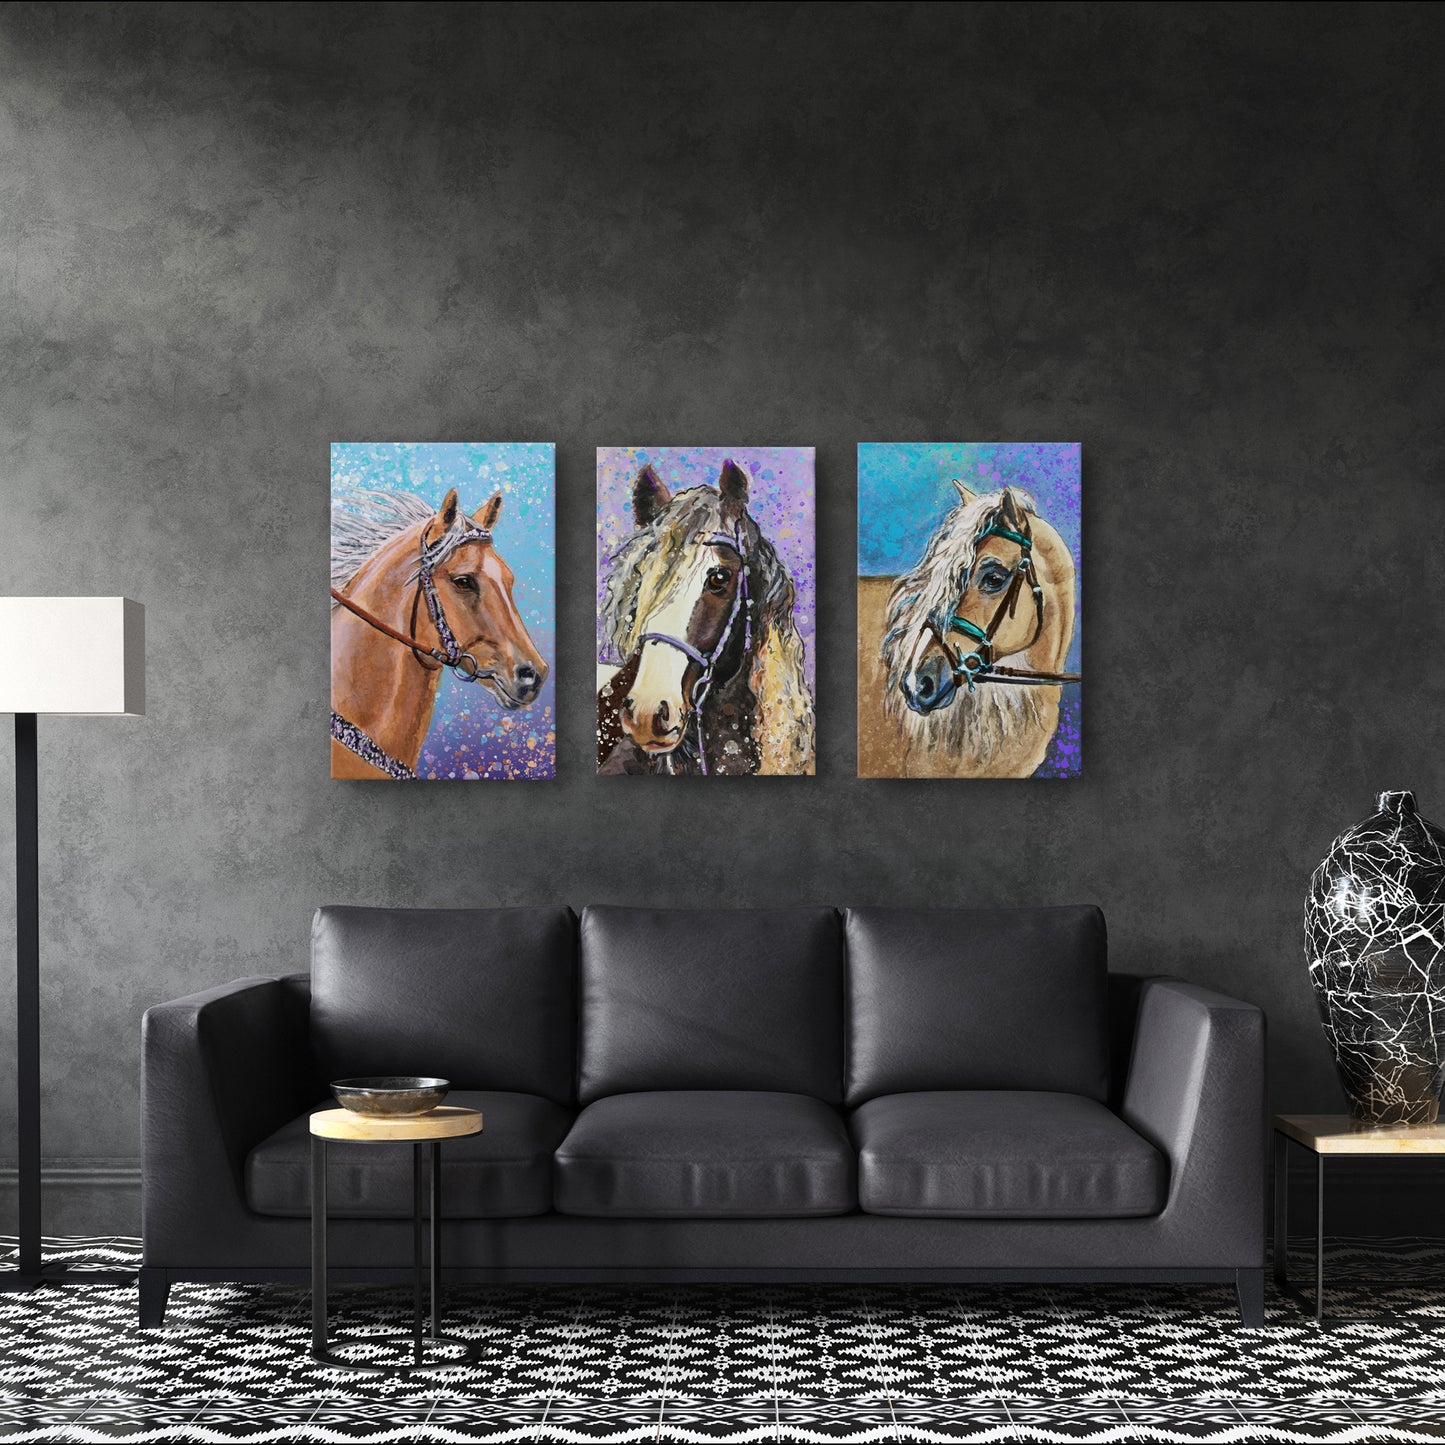 Gypsy - Horse Portrait